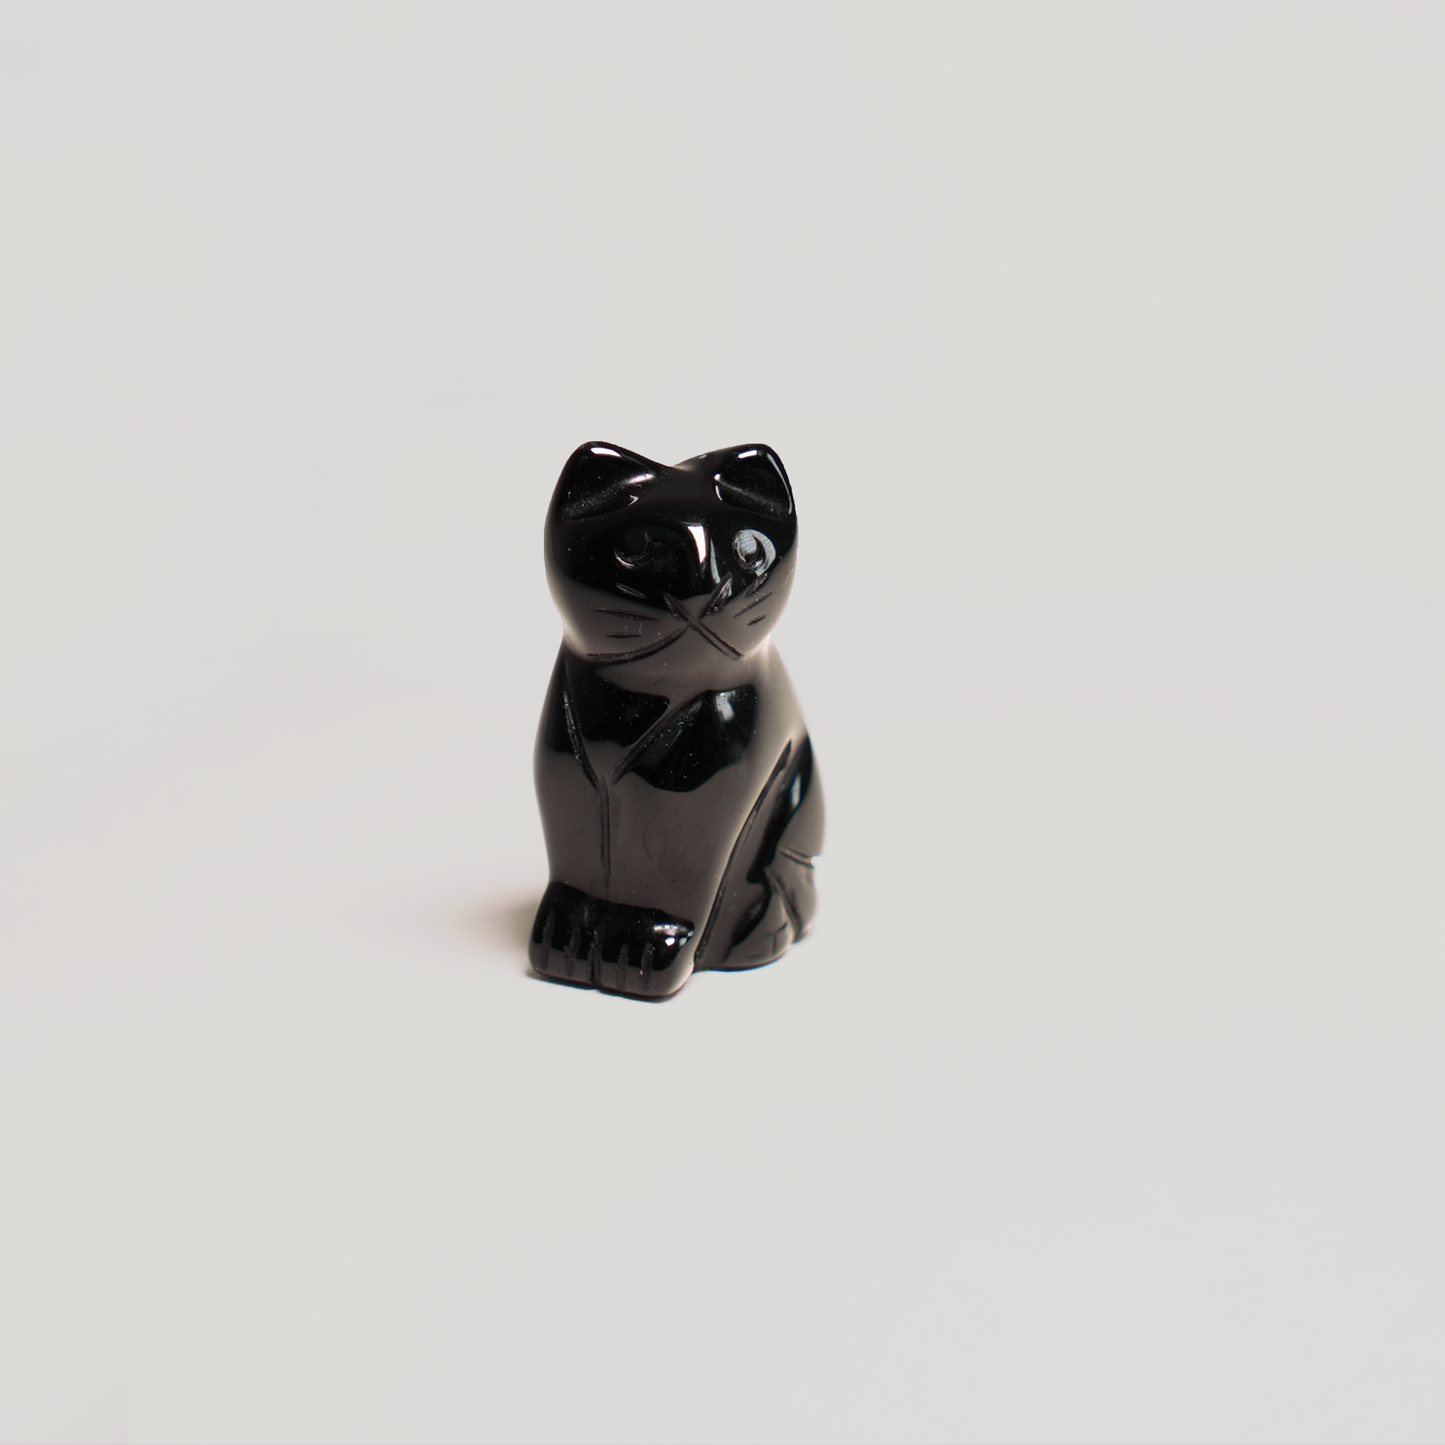 Obsidian Cat